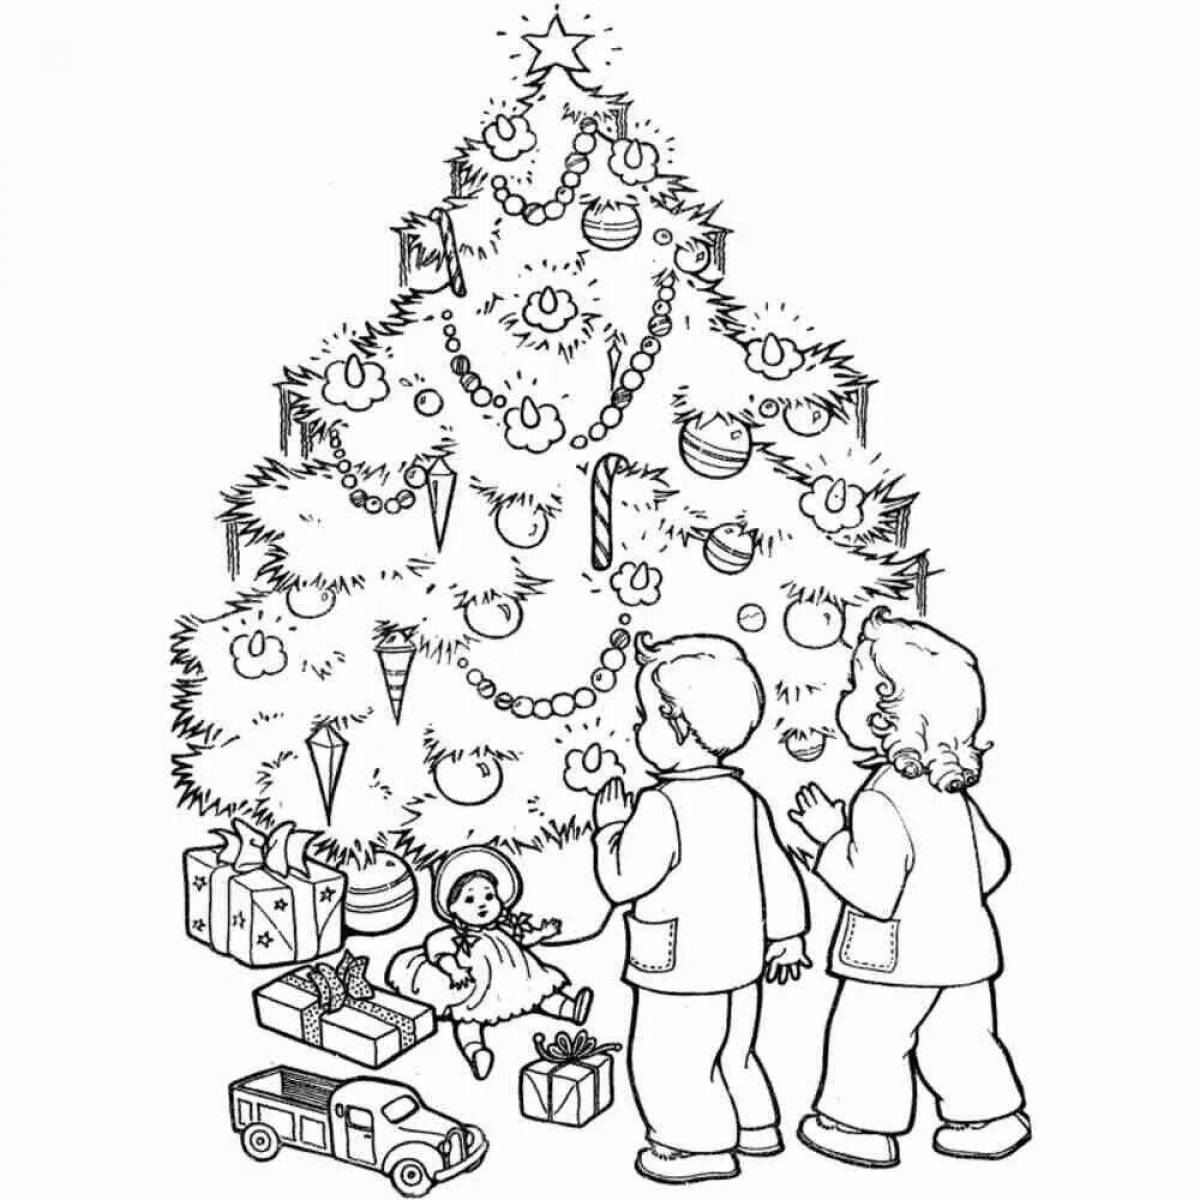 Children decorate the Christmas tree